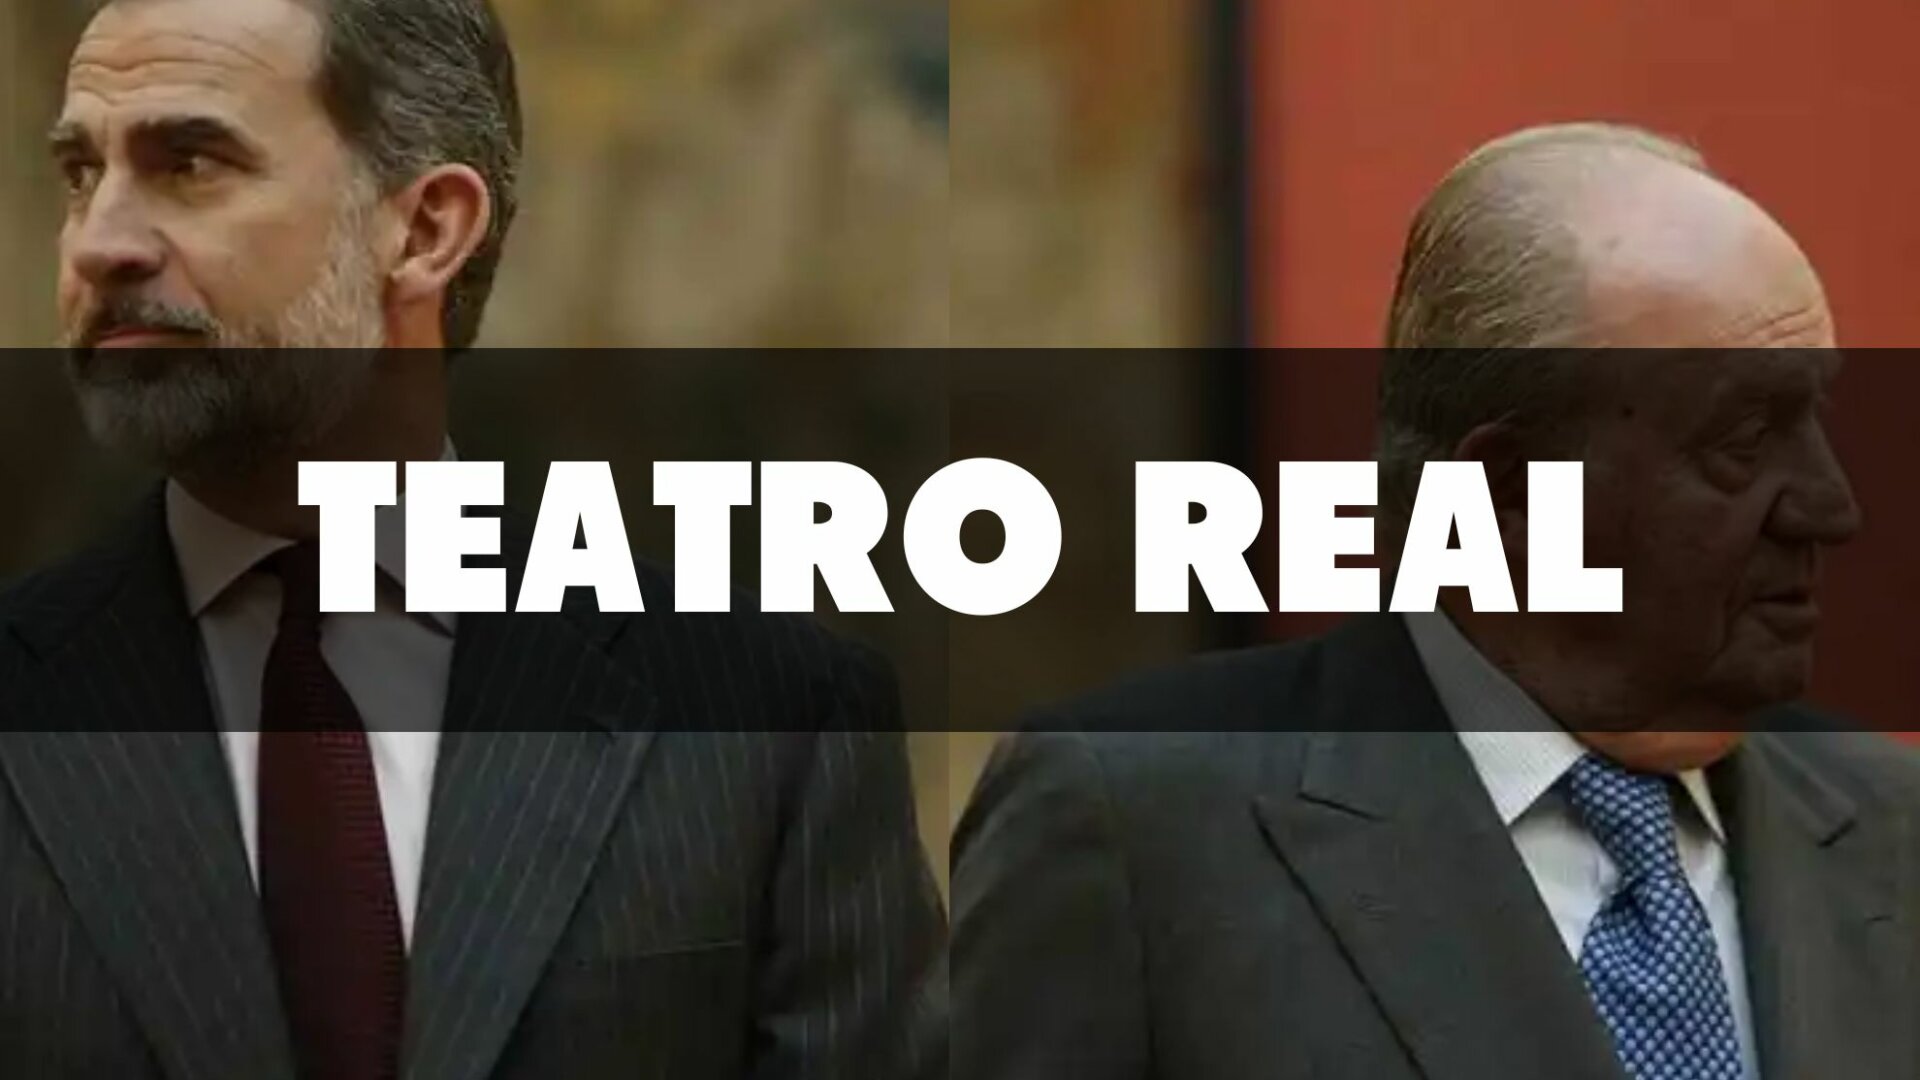 Teatro real: Felipe VI escenifica una sobreactuada ruptura con Juan Carlos I